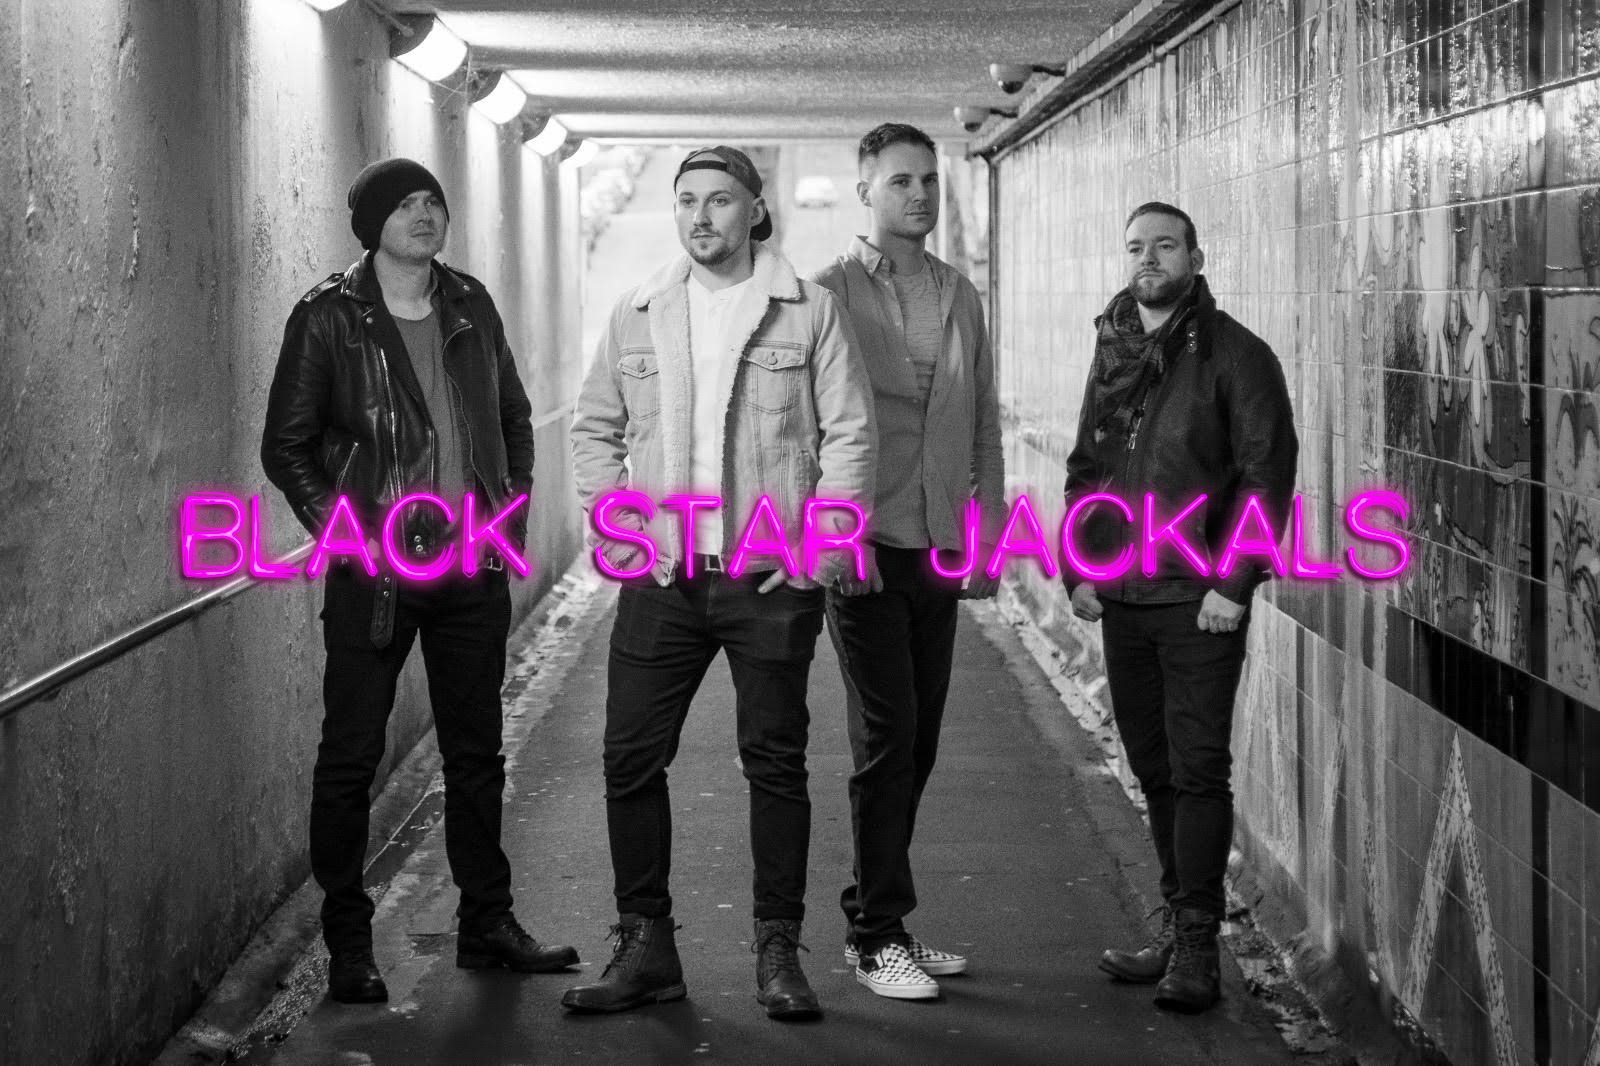 Black Star Jackals